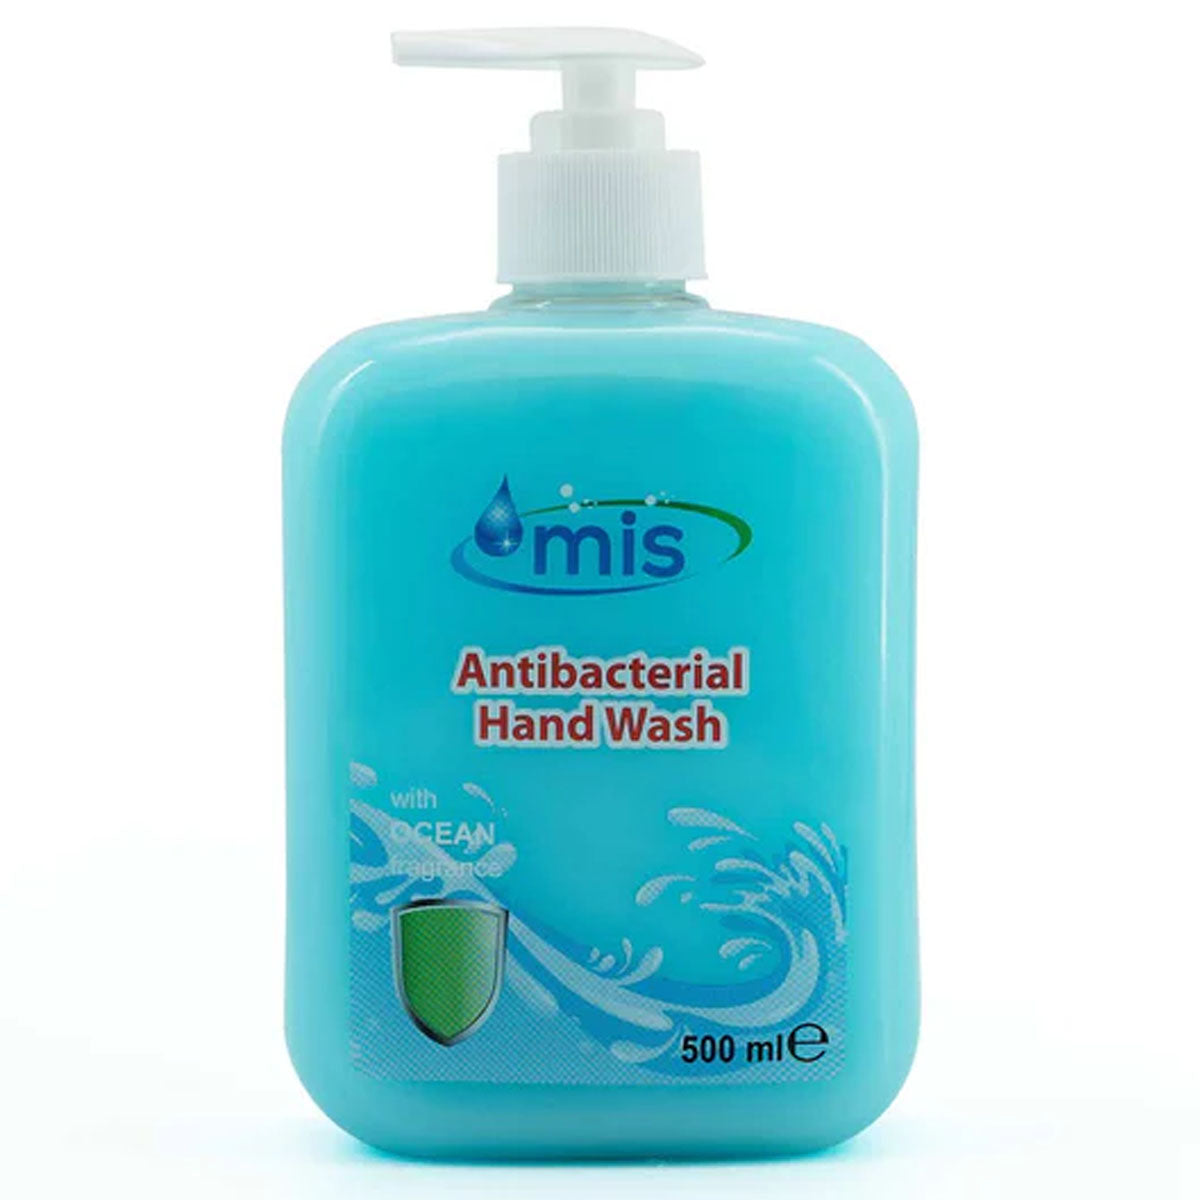 Mis - Antbacterial Hand Wash Ocean - 500ml - Continental Food Store